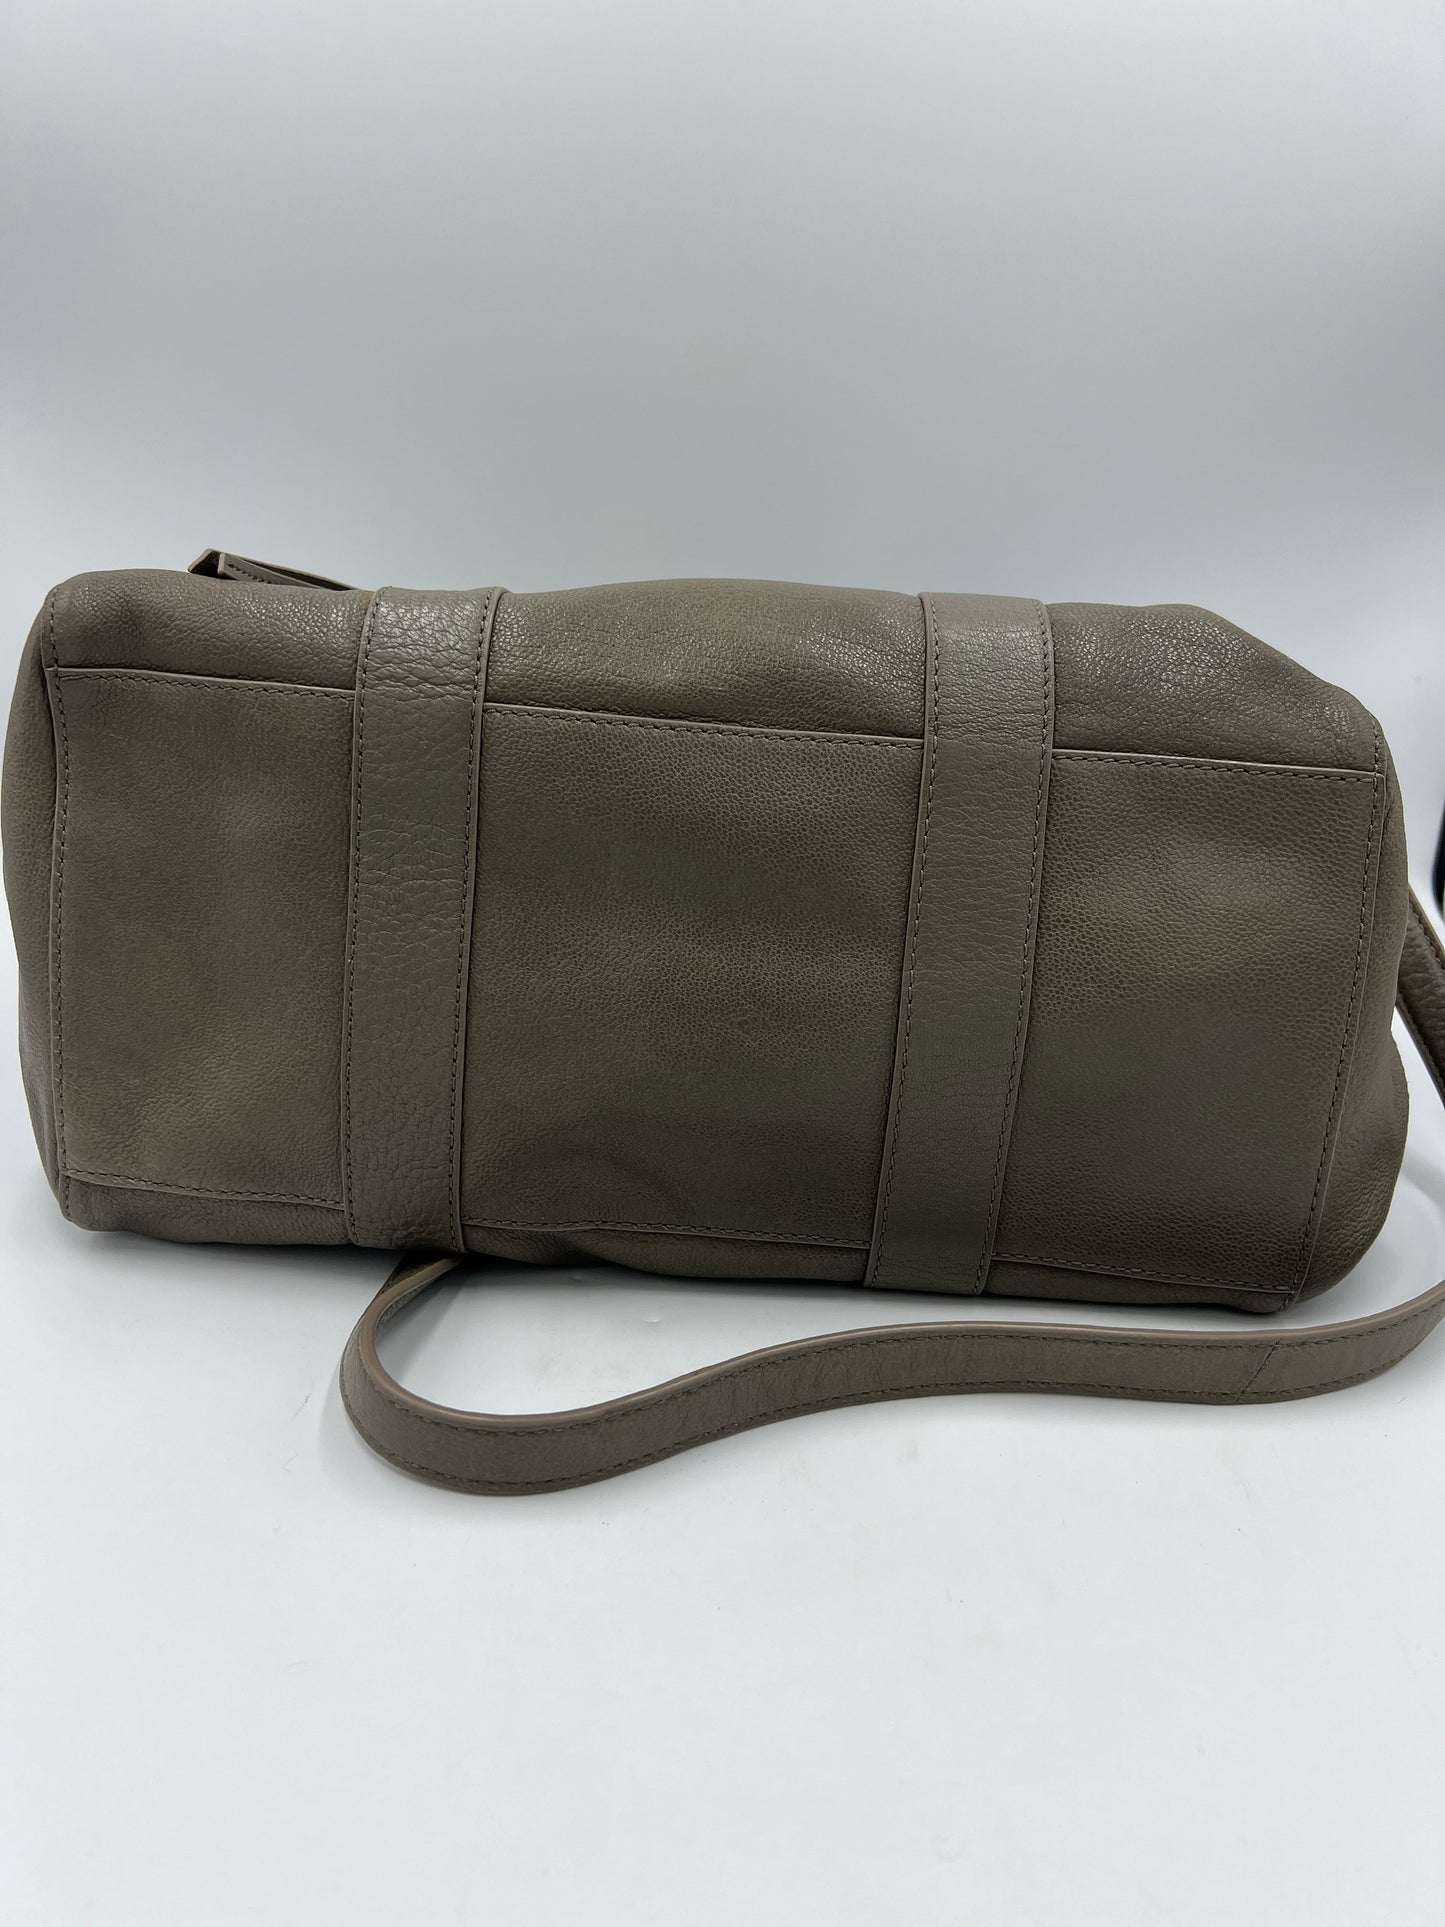 Tory Burch Brody Leather Satchel Handbag